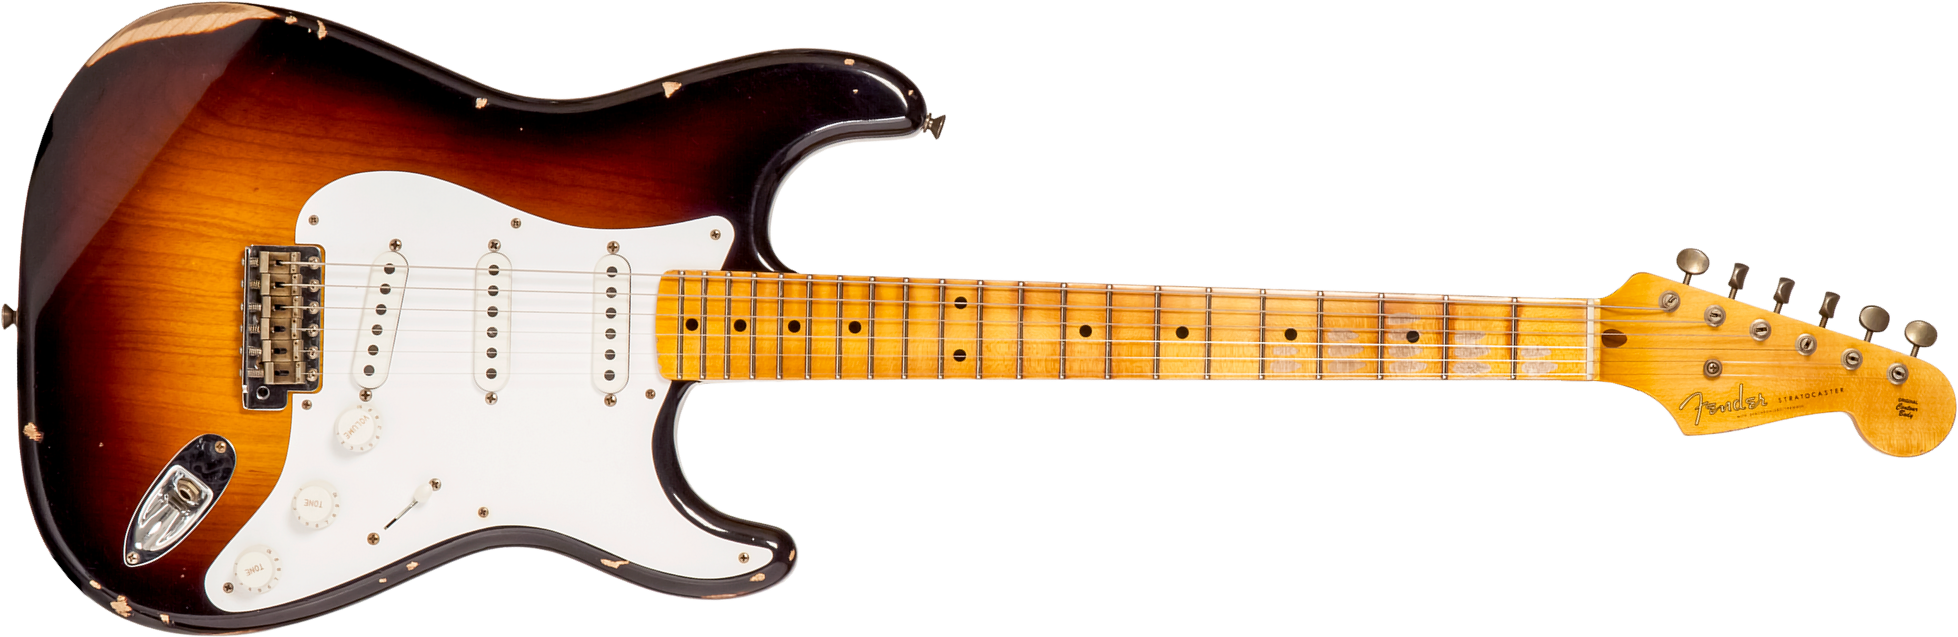 Fender Custom Shop Strat 1954 70th Anniv. 3s Trem Mn #xn4158 - Relic Wide-fade 2-color Sunburst - Guitarra eléctrica con forma de str. - Main picture